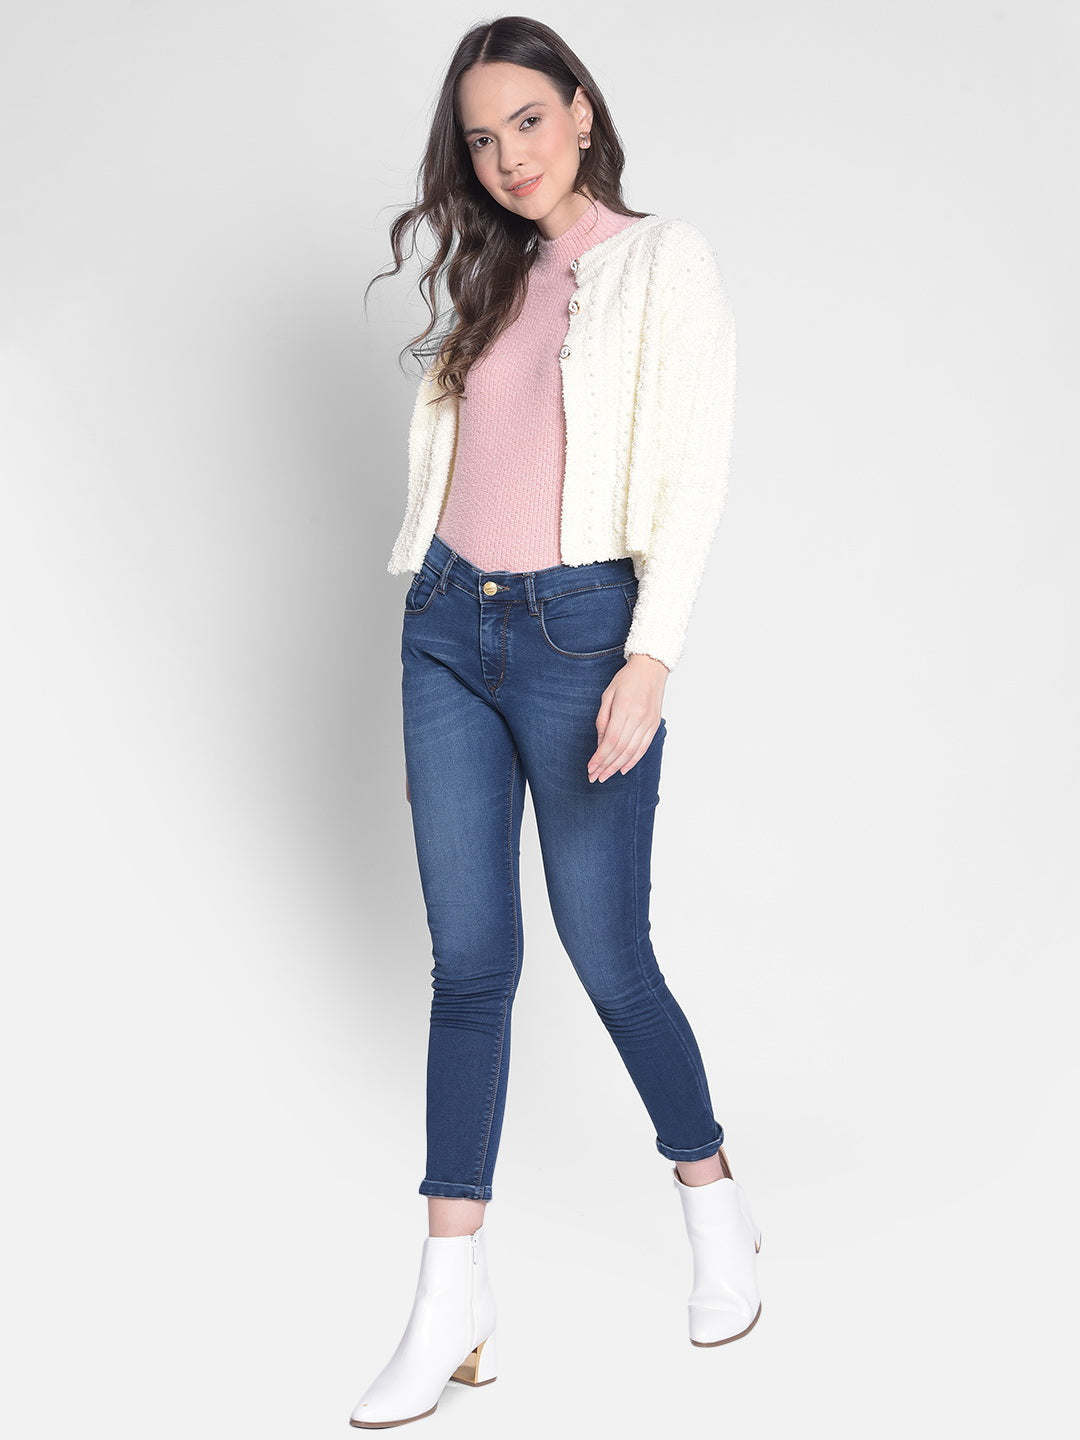 Off White Crop Length Cardigan-Women Sweaters-Crimsoune Club